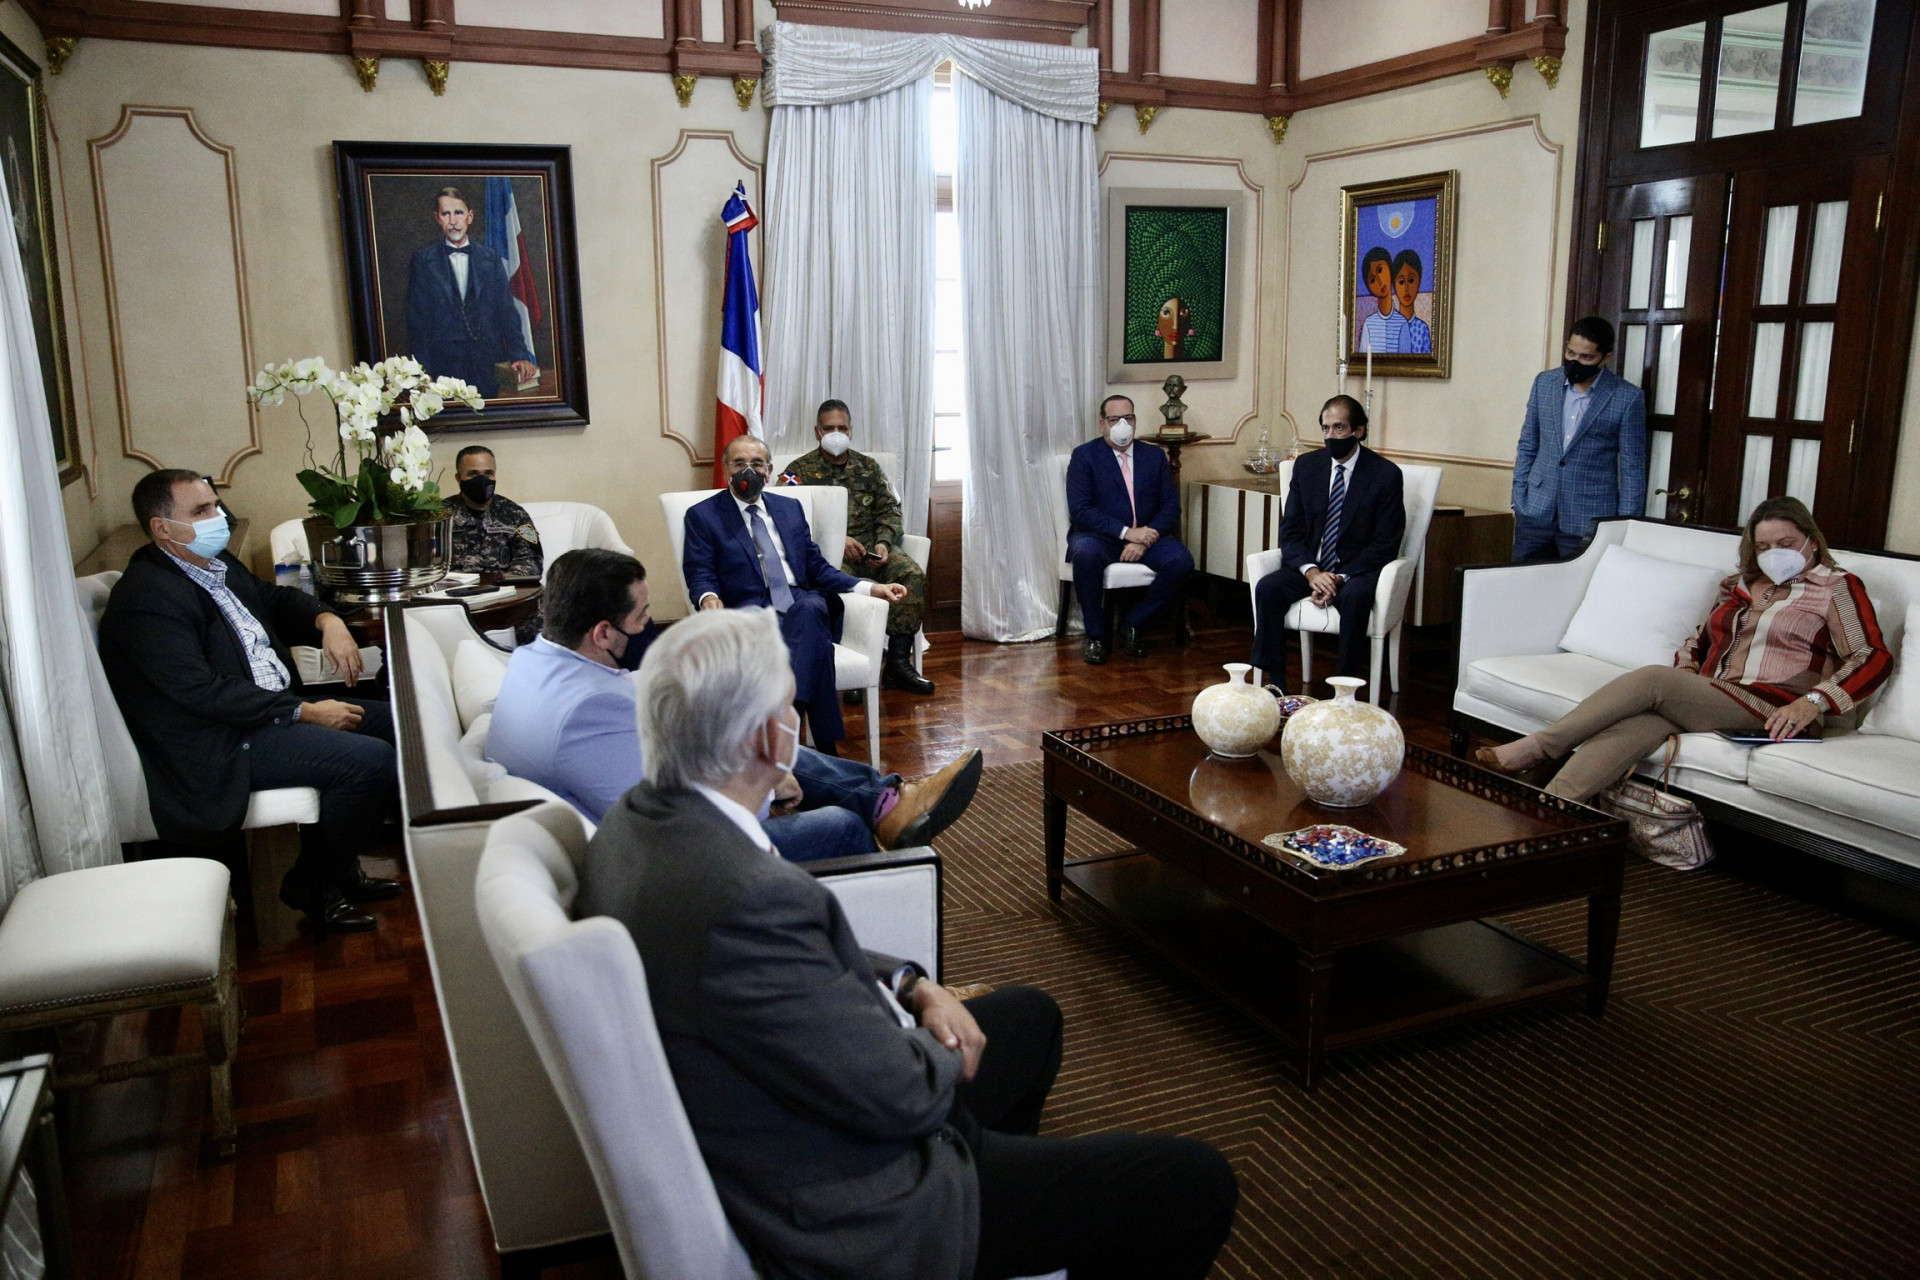 REPÚBLICA DOMINICANA: Presidente Danilo Medina se reúne con miembros de Comité de Emergencia y Gestión Sanitaria. Pasan balance a situación COVID-19